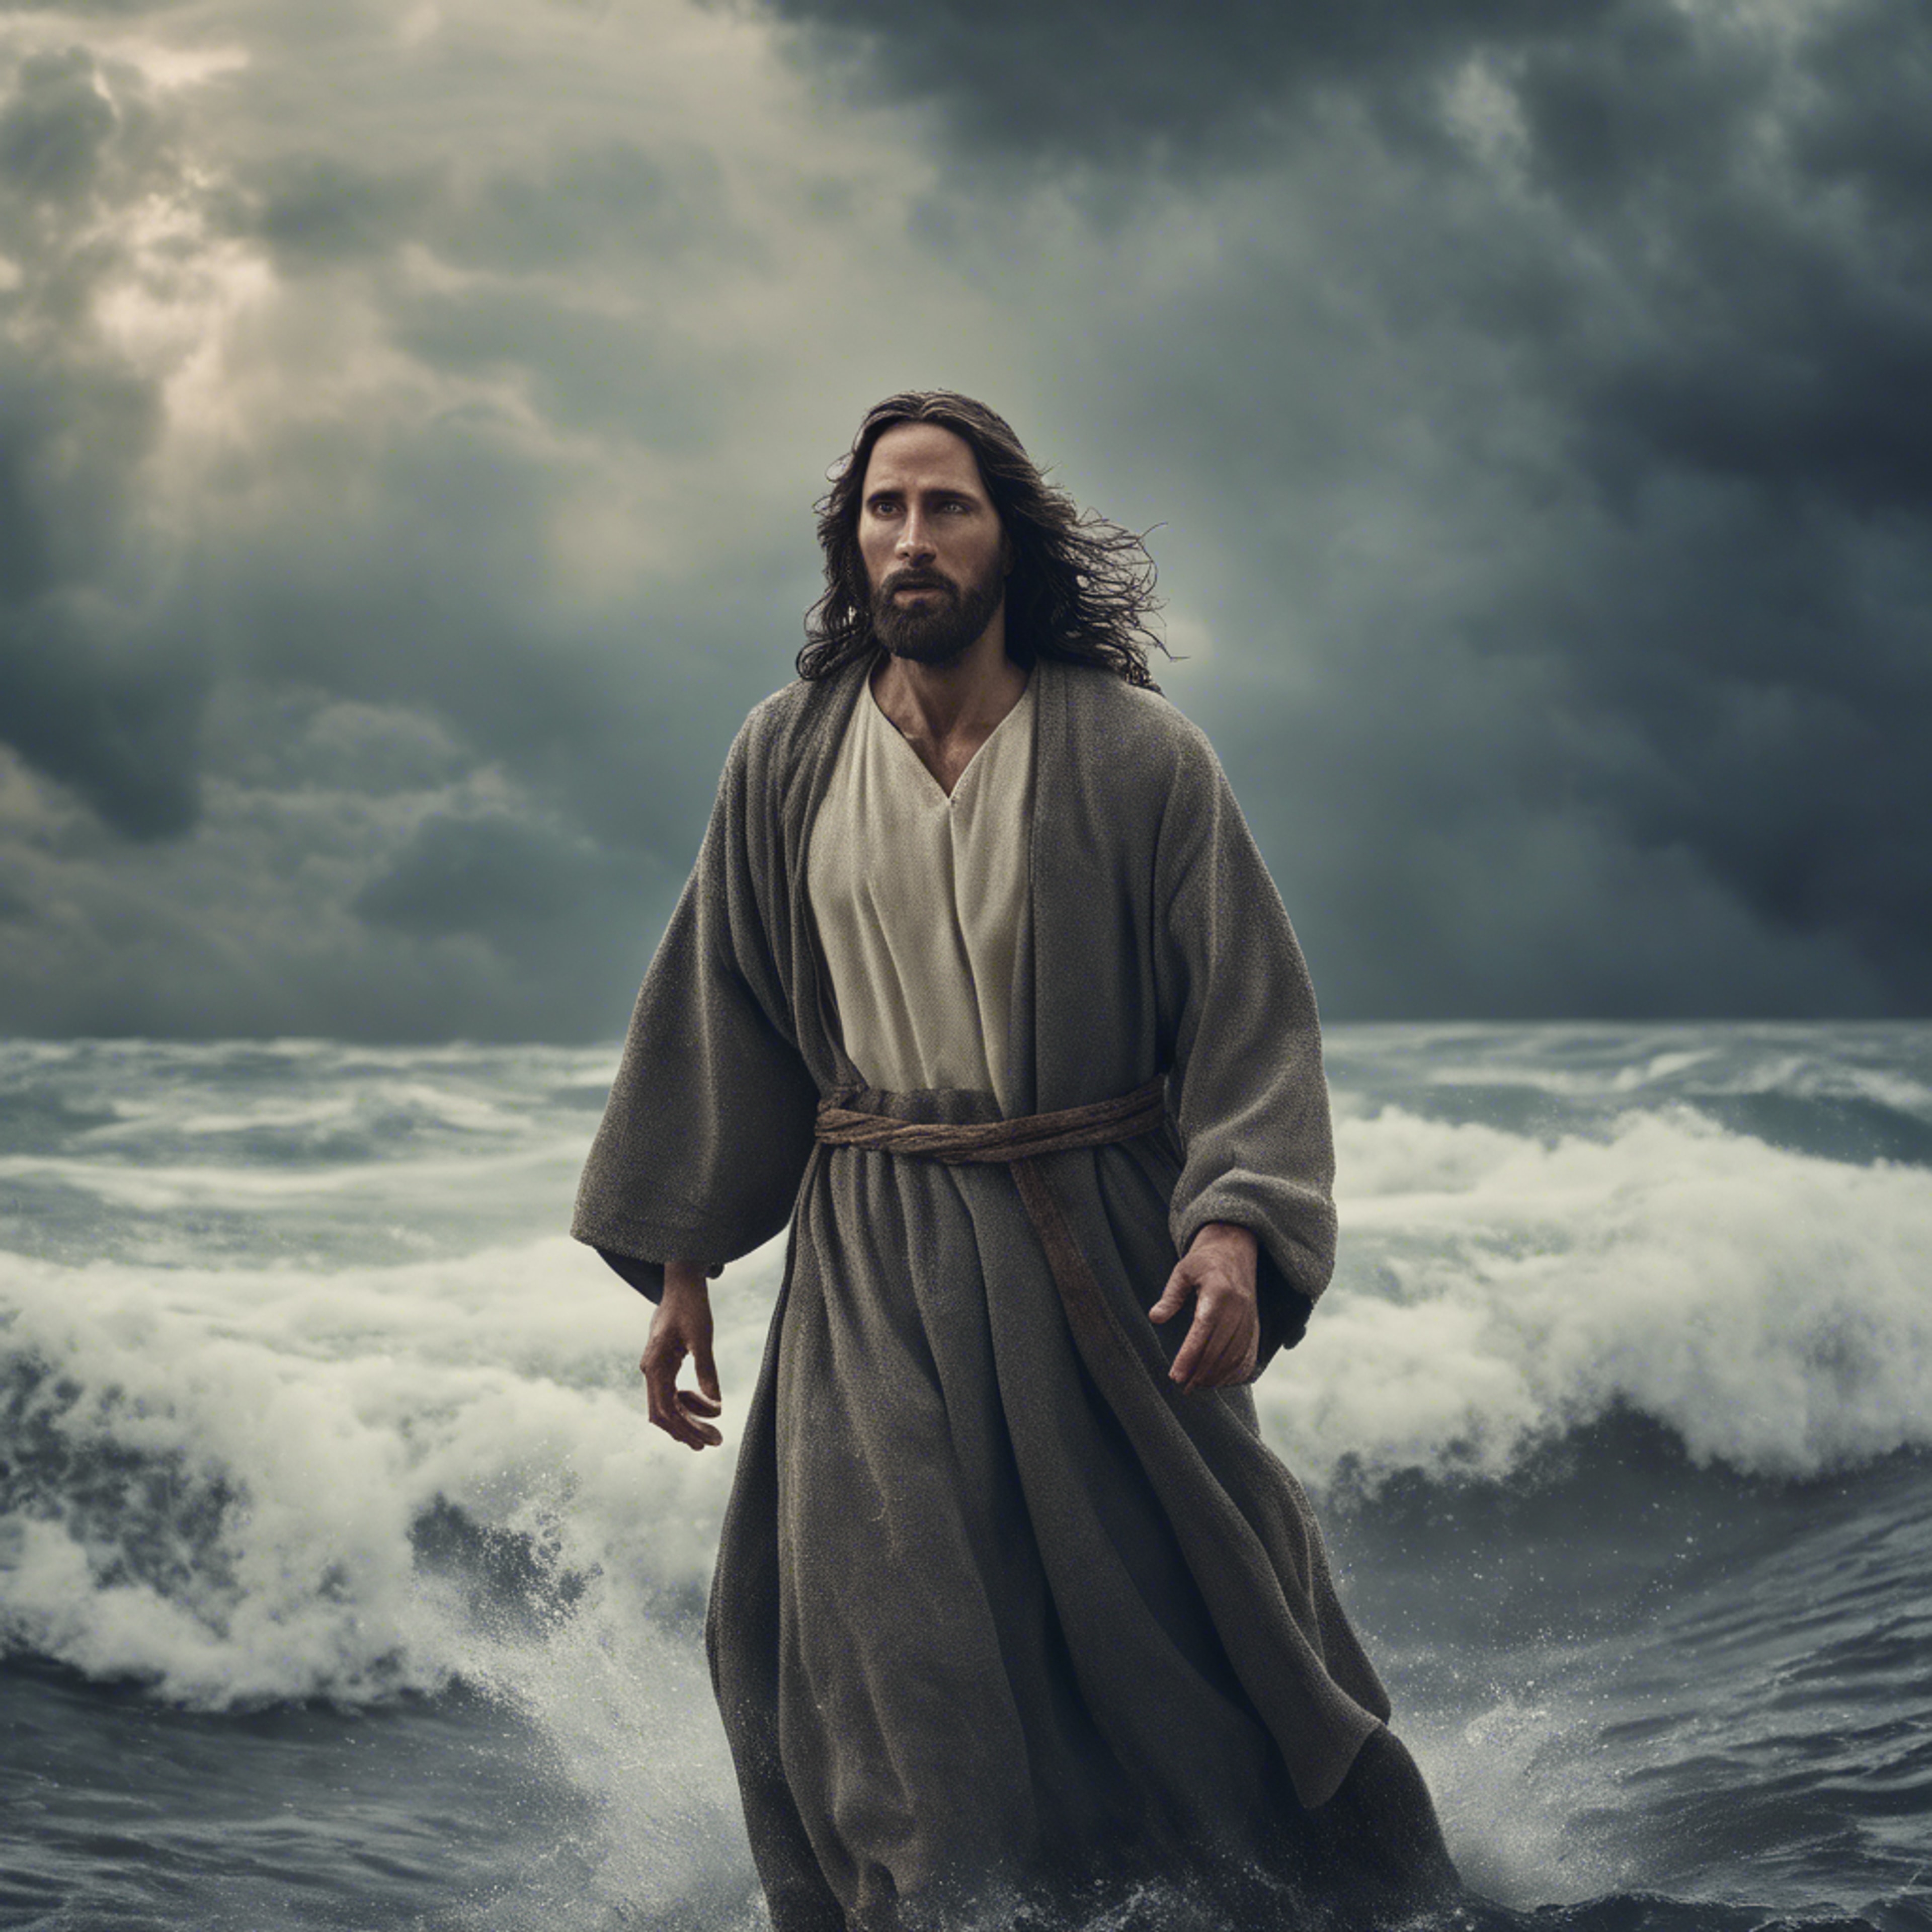 Jesus Christ calmly walking across a stormy sea under a dramatic, cloudy sky. Fond d'écran[40d9c306725247569090]